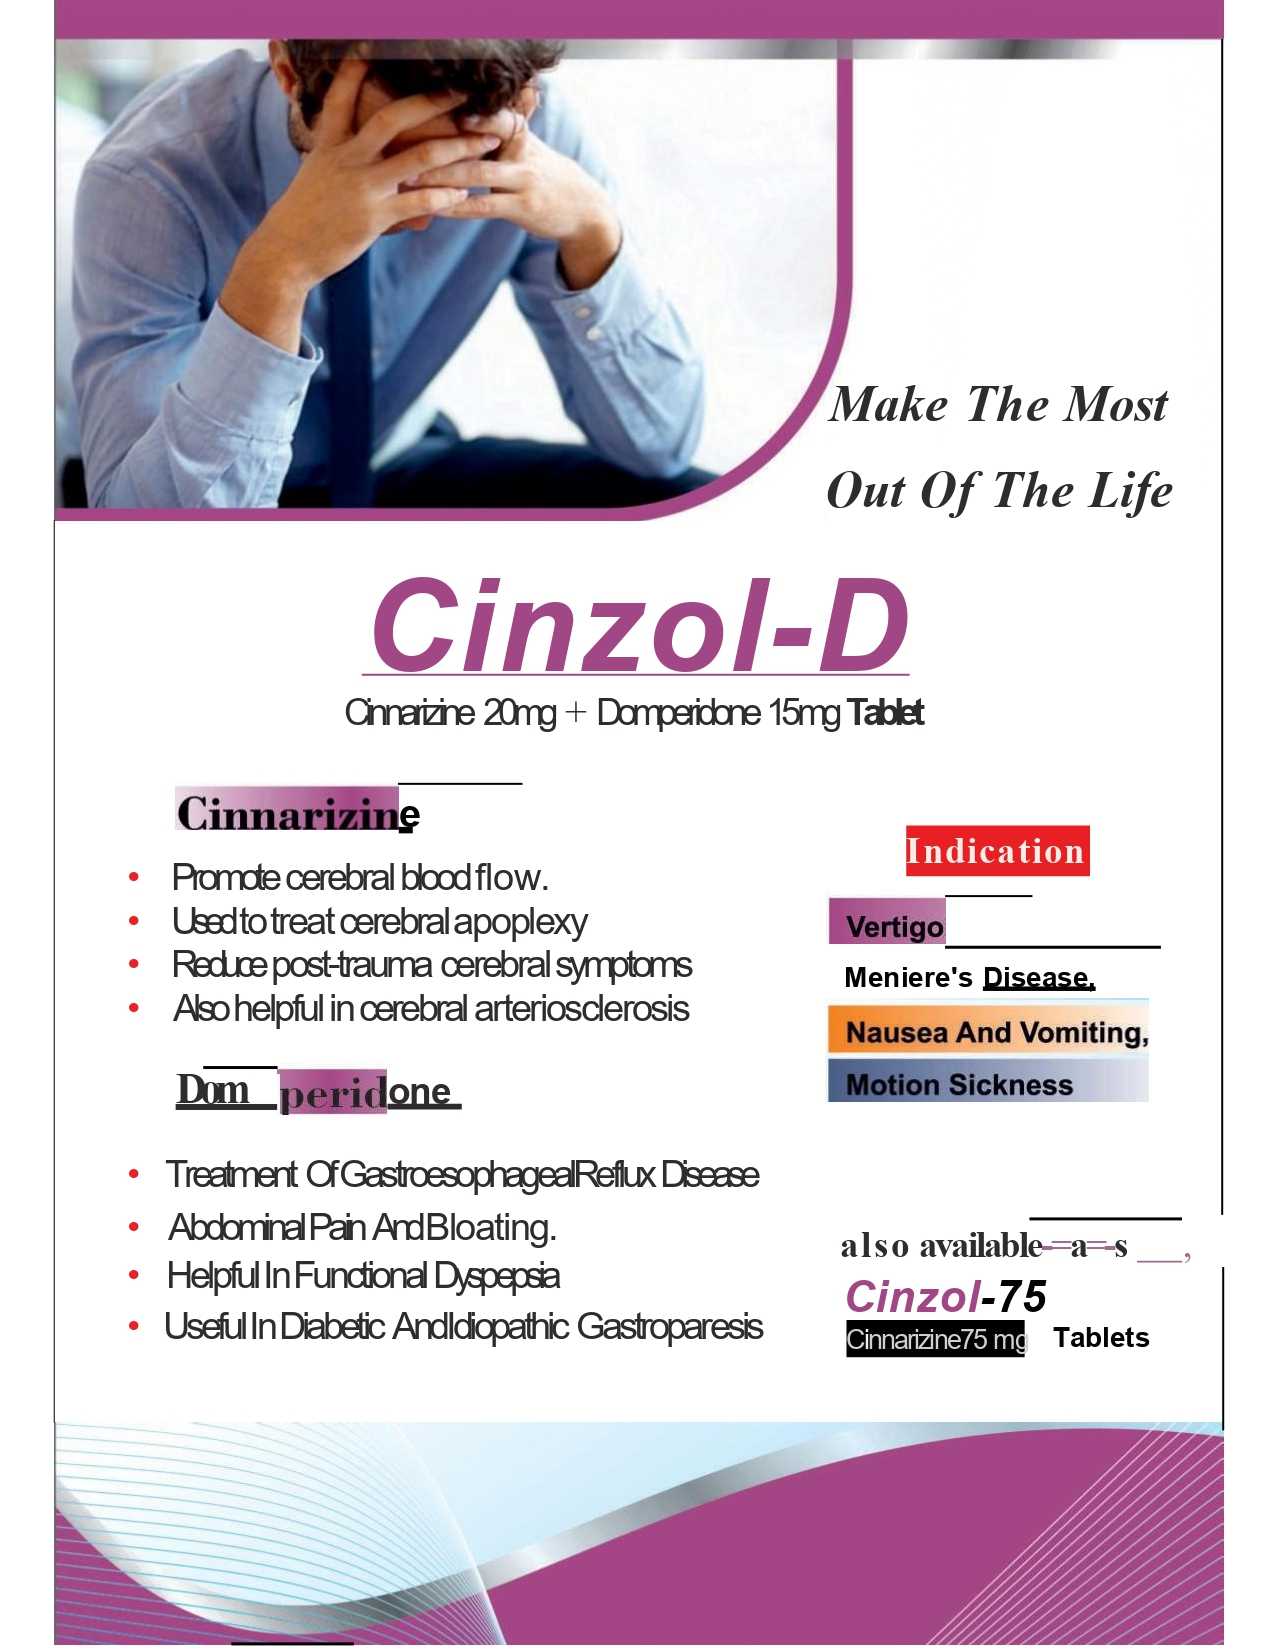 Cinzol-D